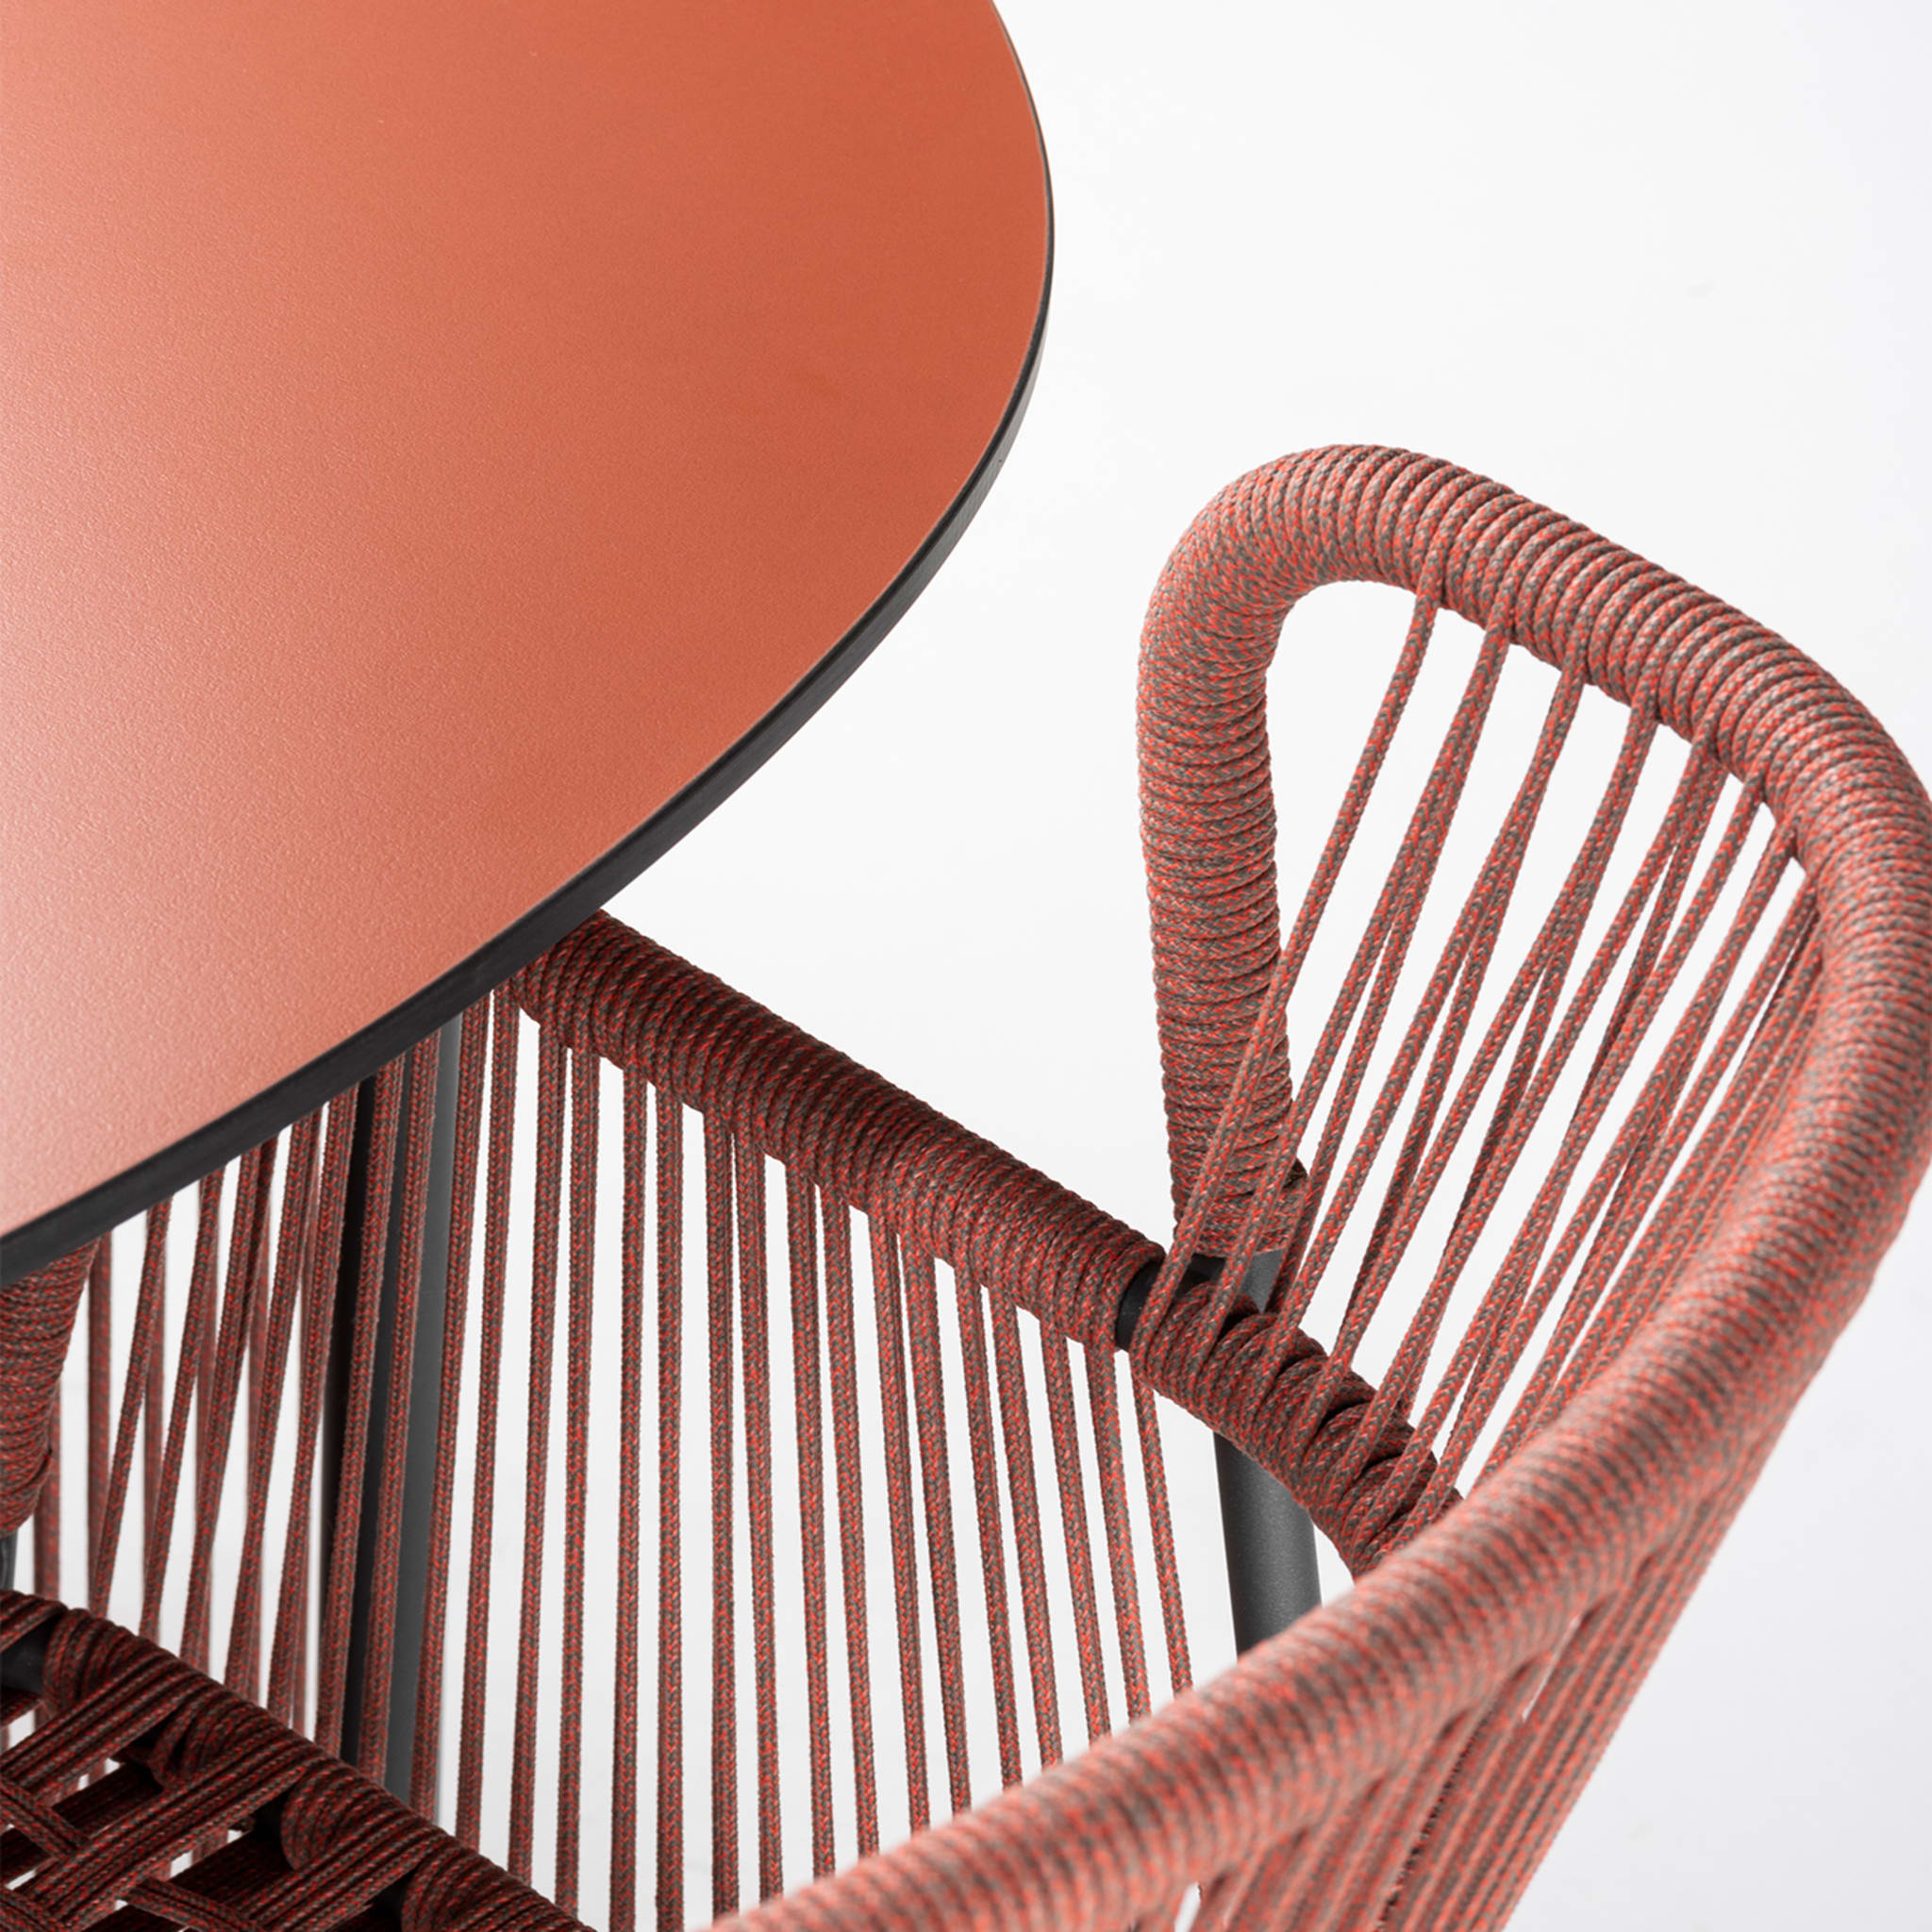 Altana SP Gray & Pink Chair by Antonio De Marco - Alternative view 4